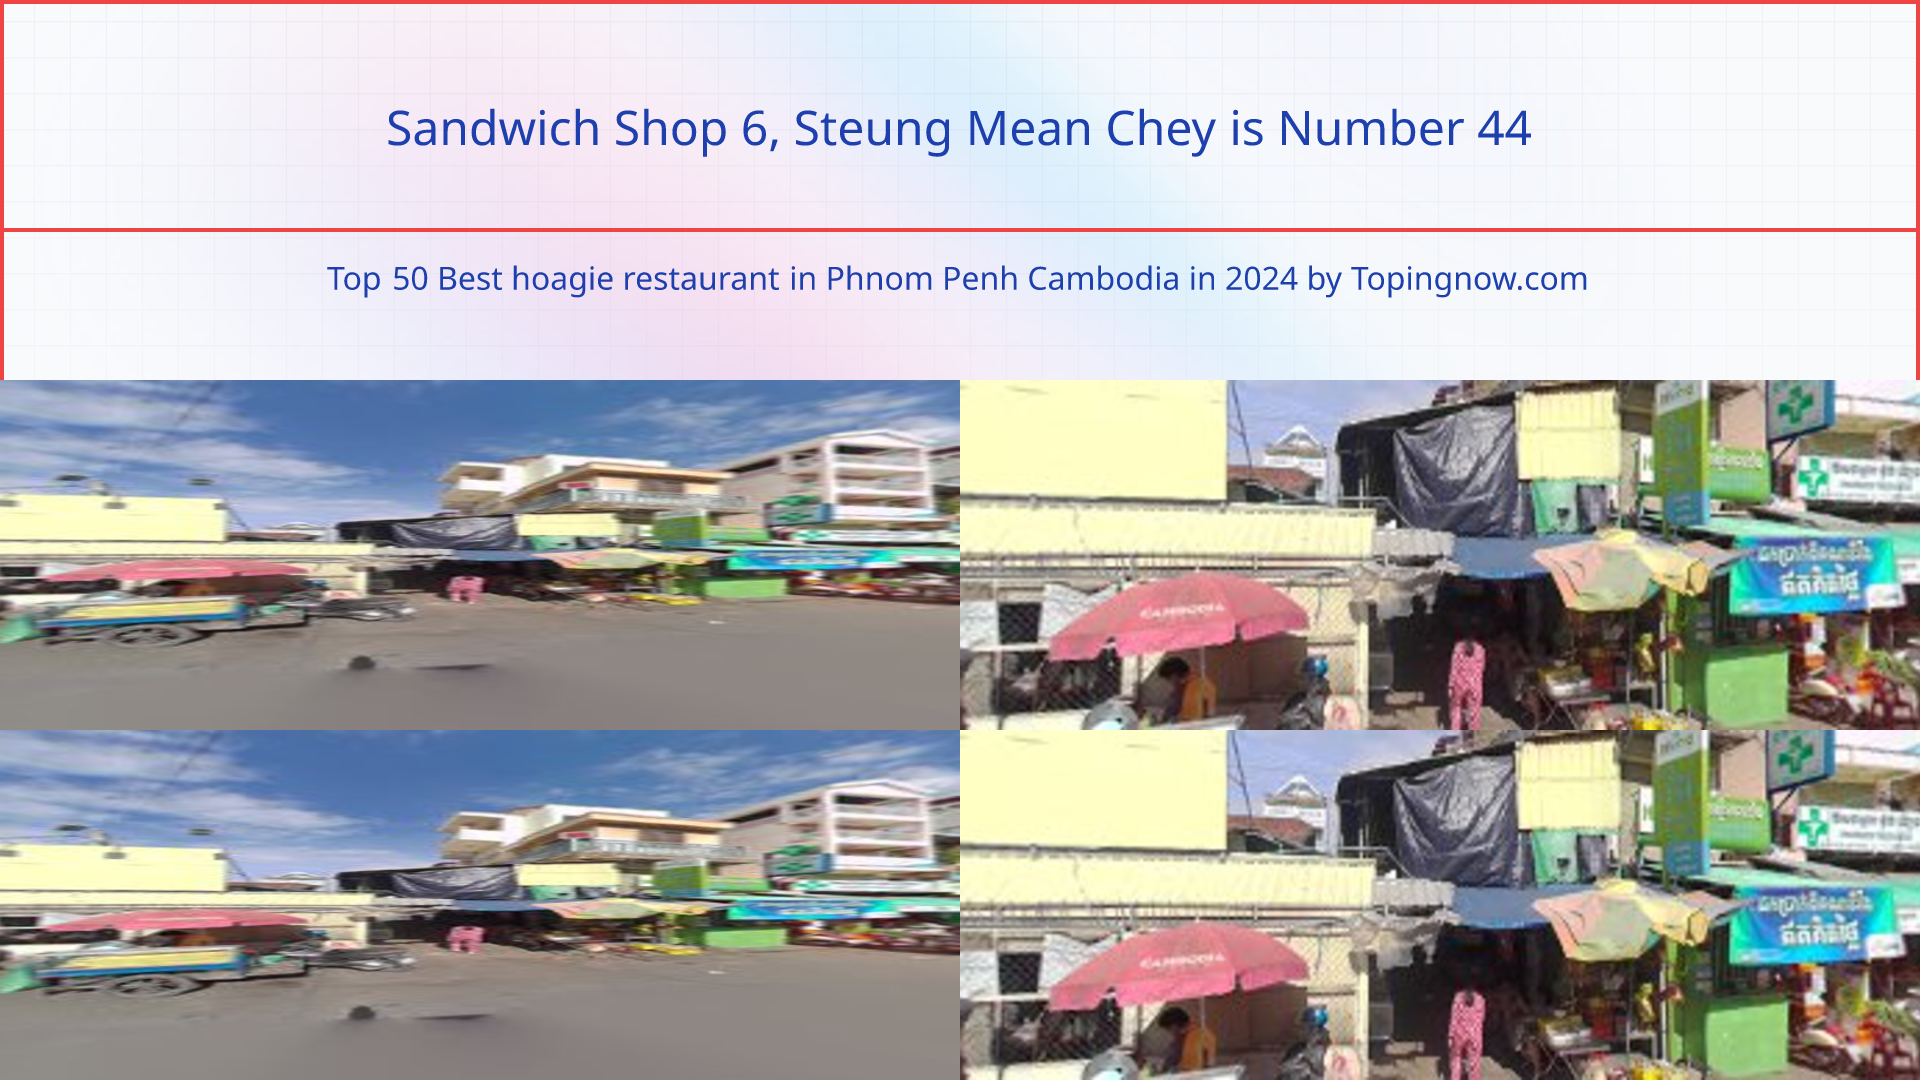 Sandwich Shop 6, Steung Mean Chey: Top 50 Best hoagie restaurant in Phnom Penh Cambodia in 2024